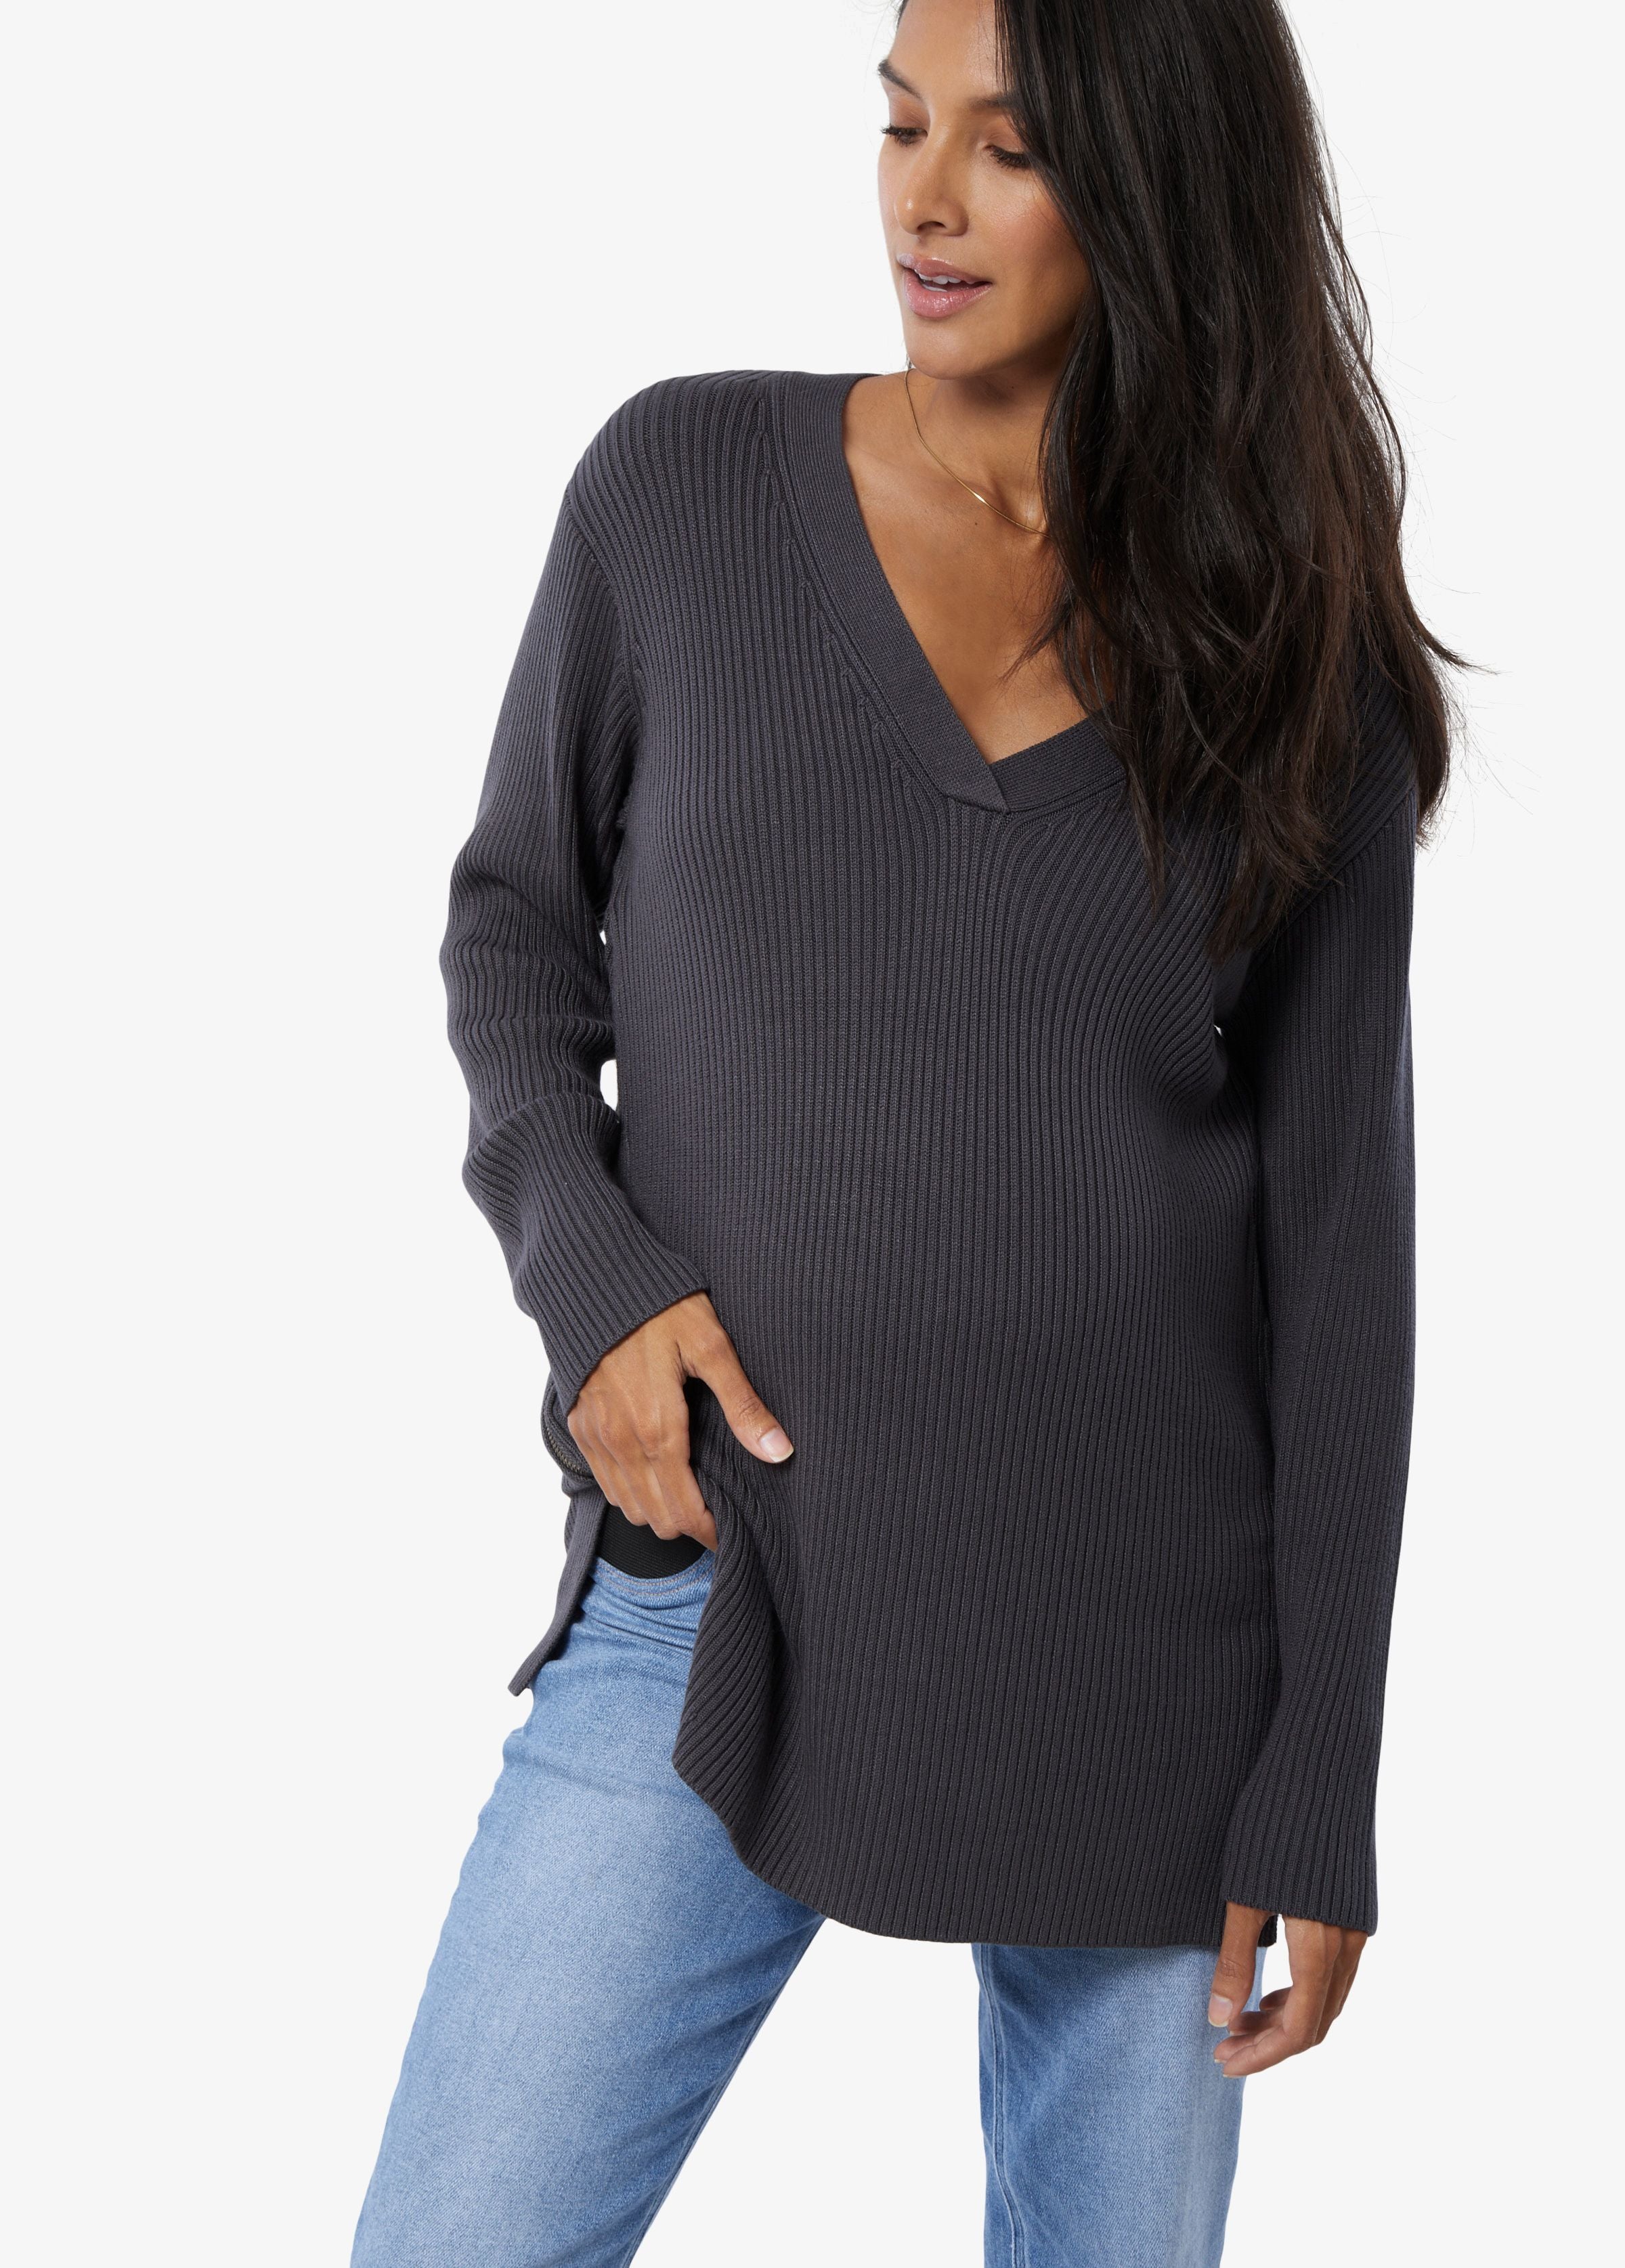 SALE!  Side Zip Sweater in Asphalt by Ingrid & Isabel